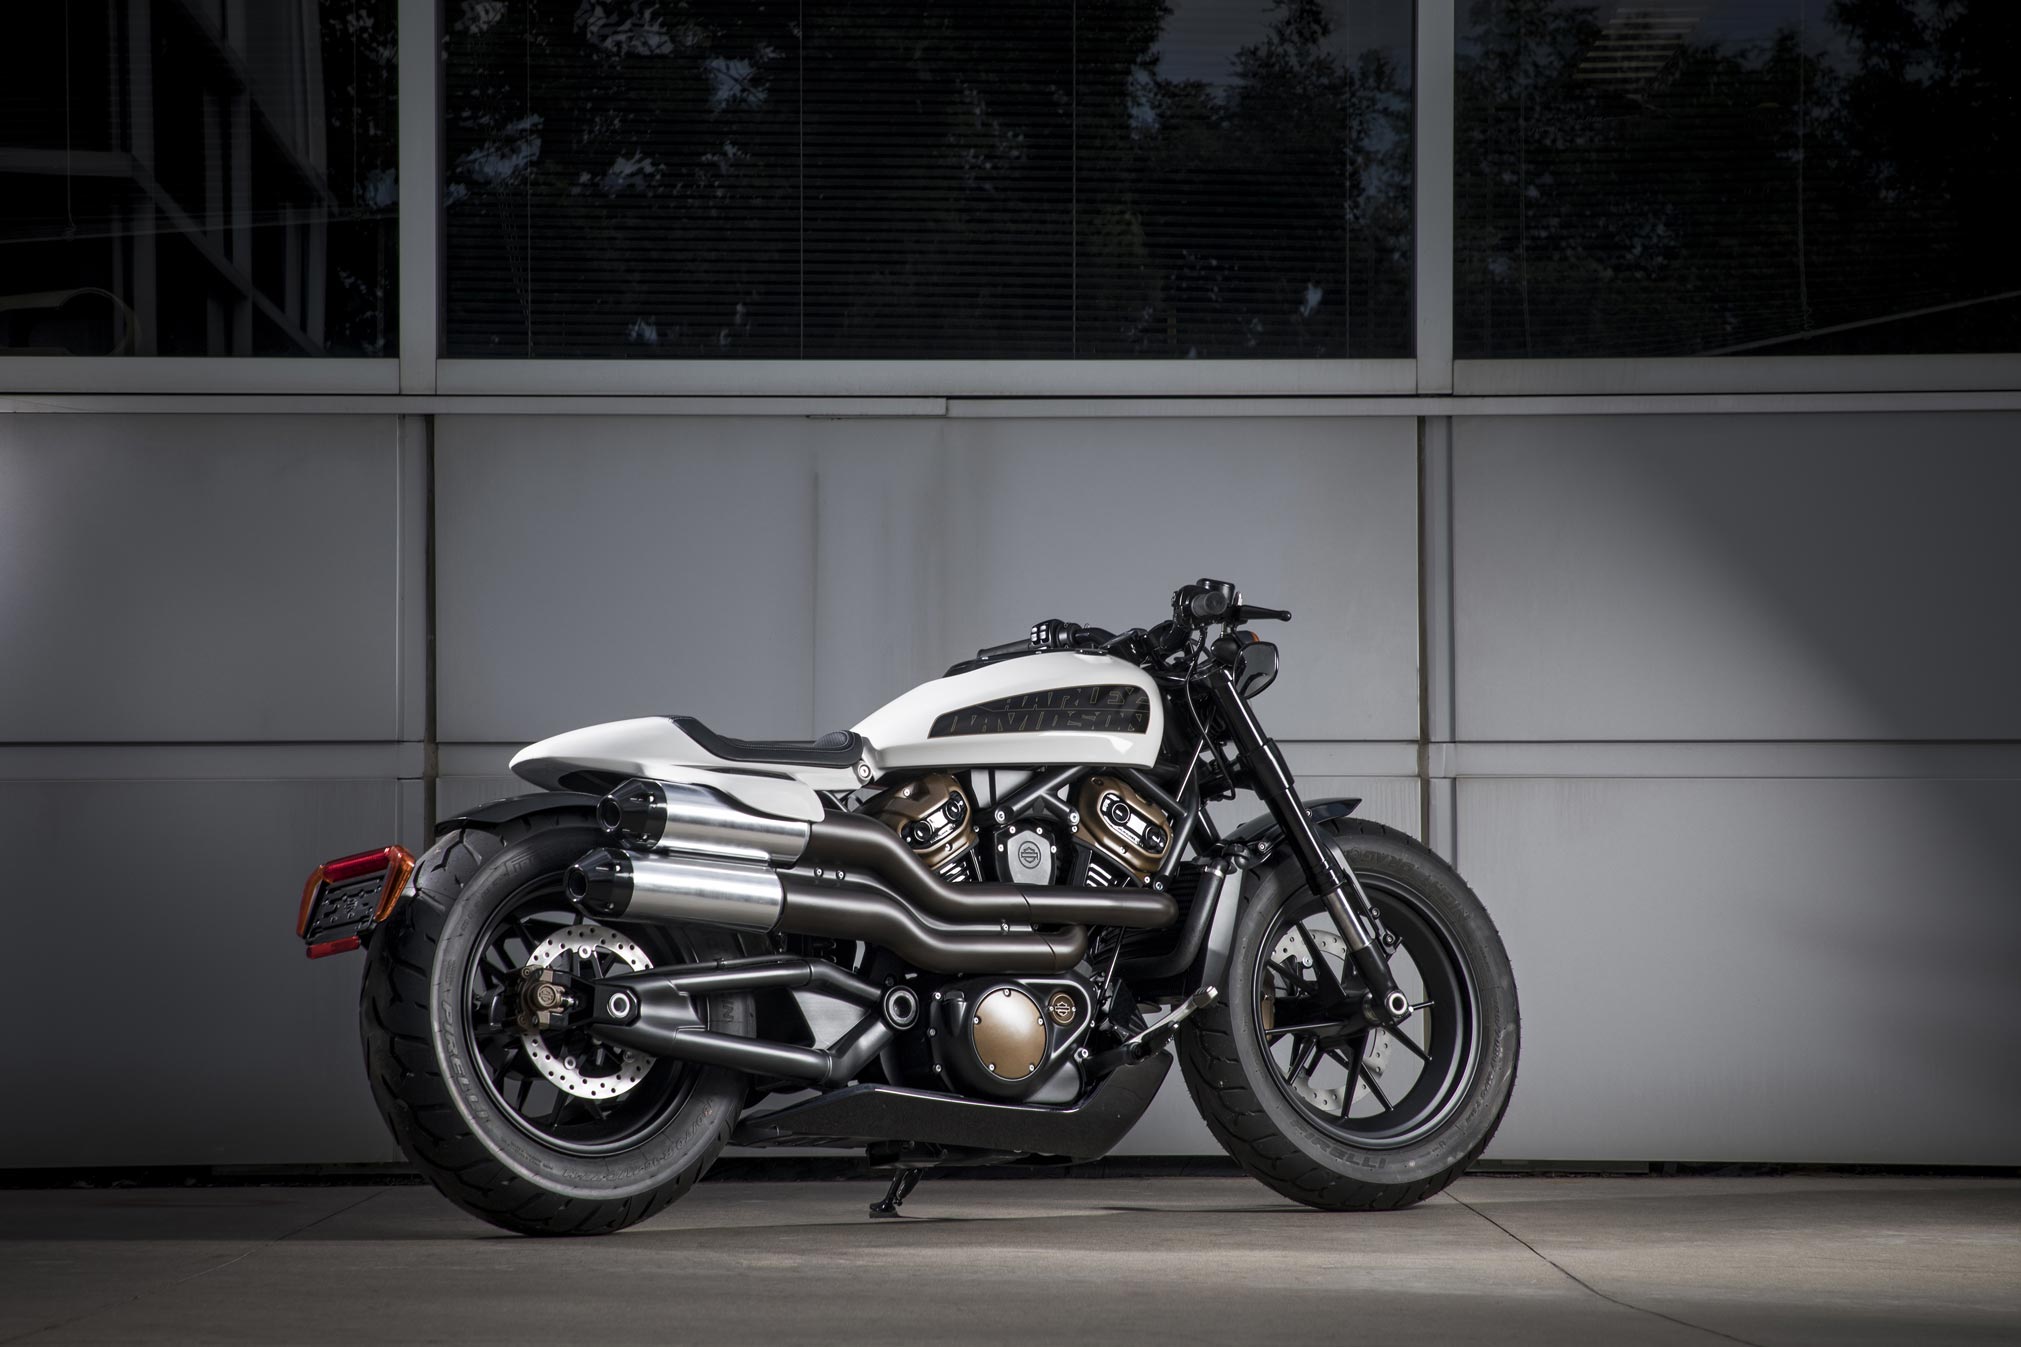 2021 Harley  Davidson  Custom Preview Guide  Total Motorcycle